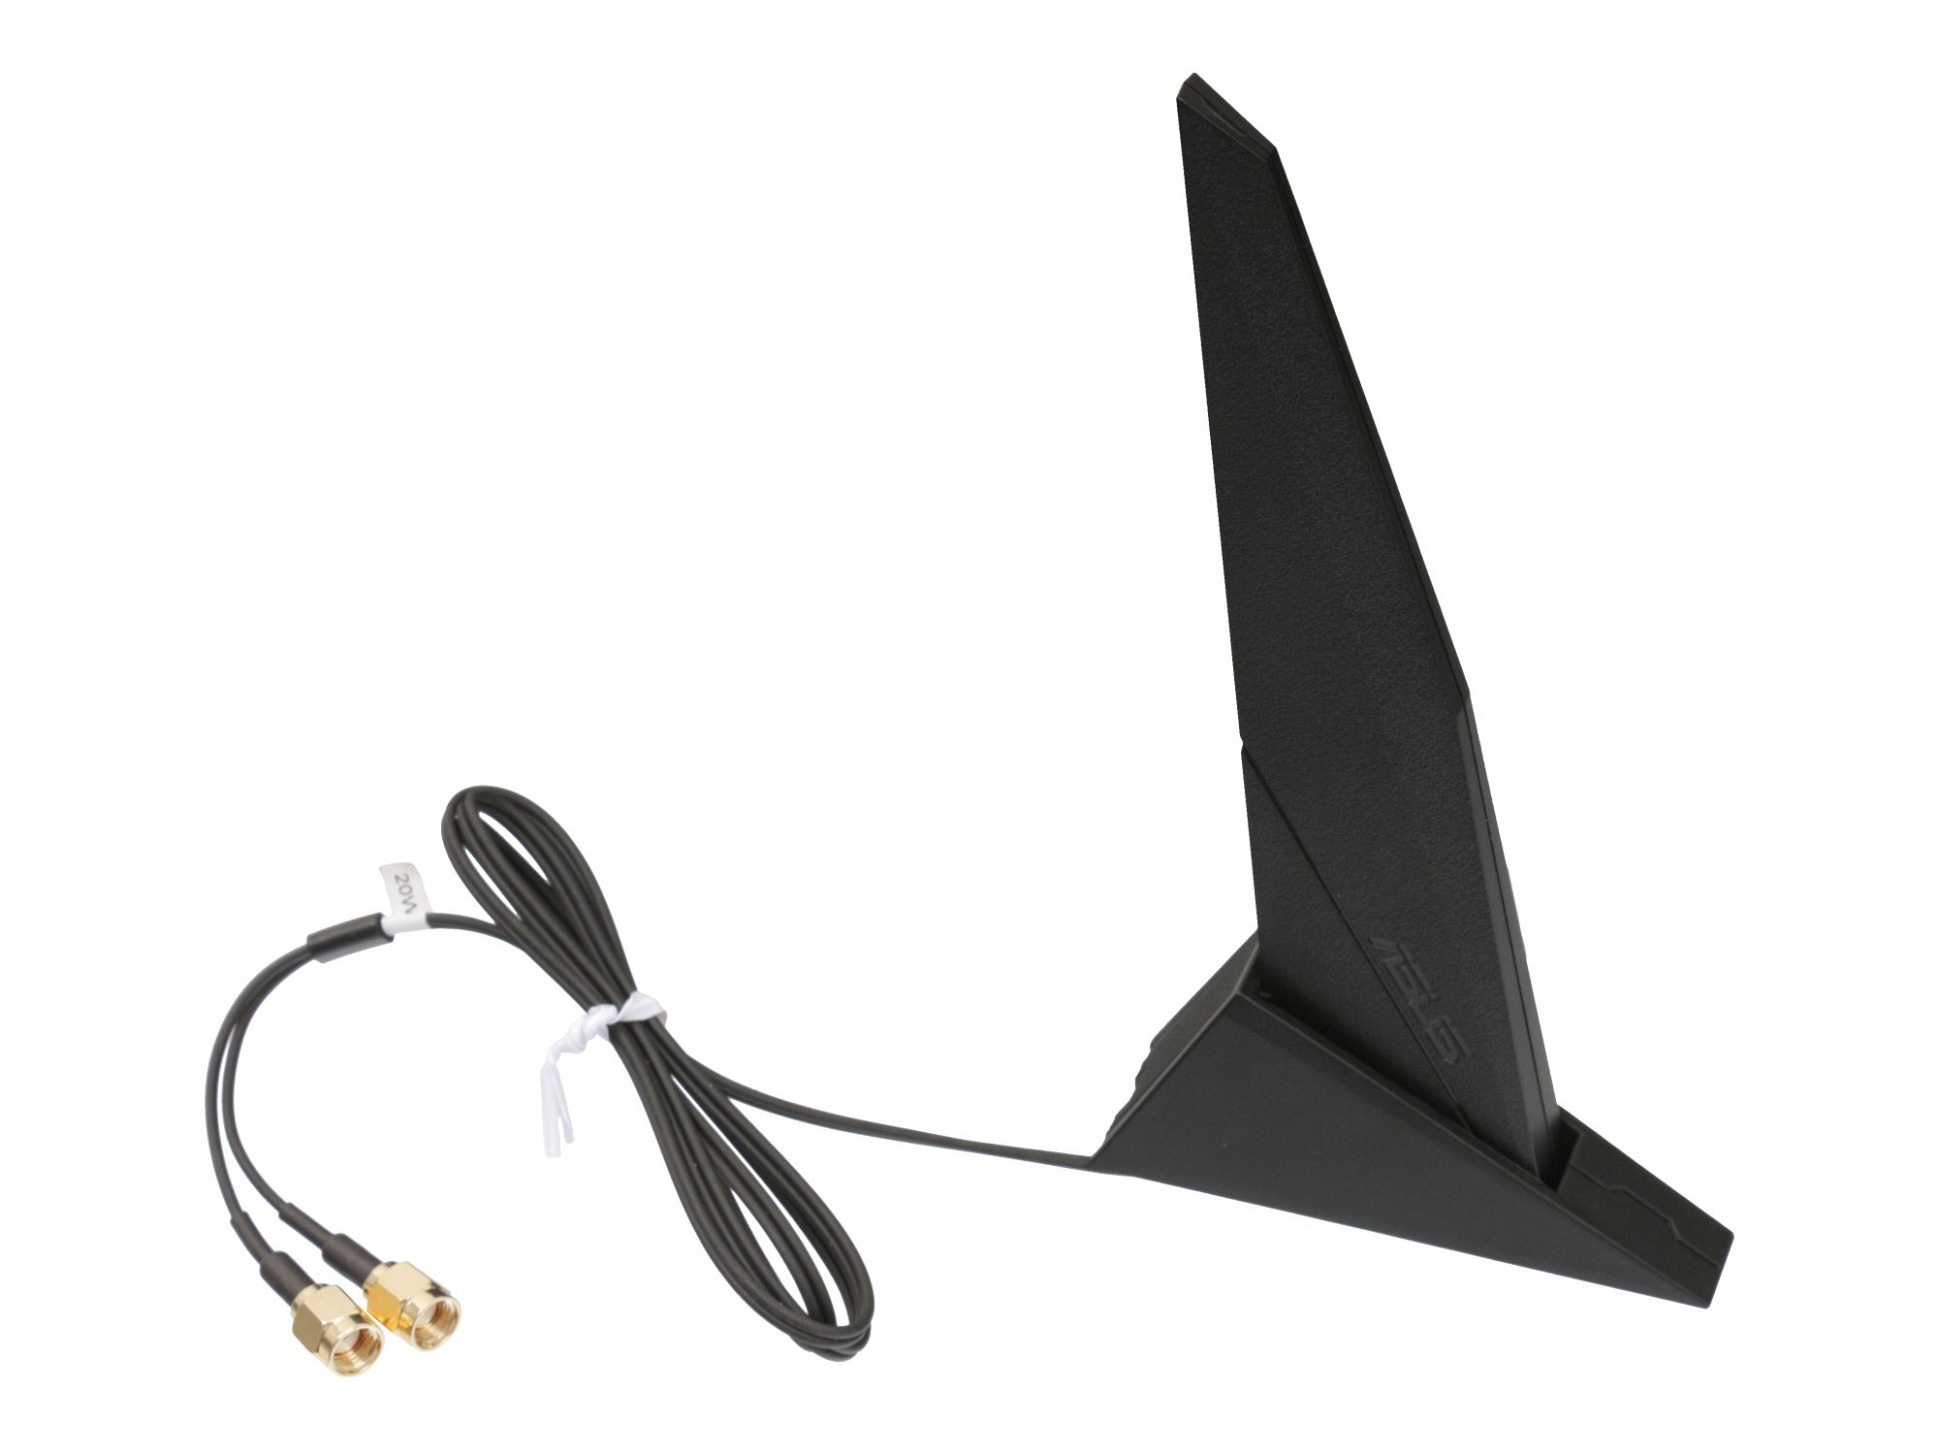 Externe Asus RP-SMA DIPOLE Antenne für Asus ROG Strix TRX40-XE GAMING